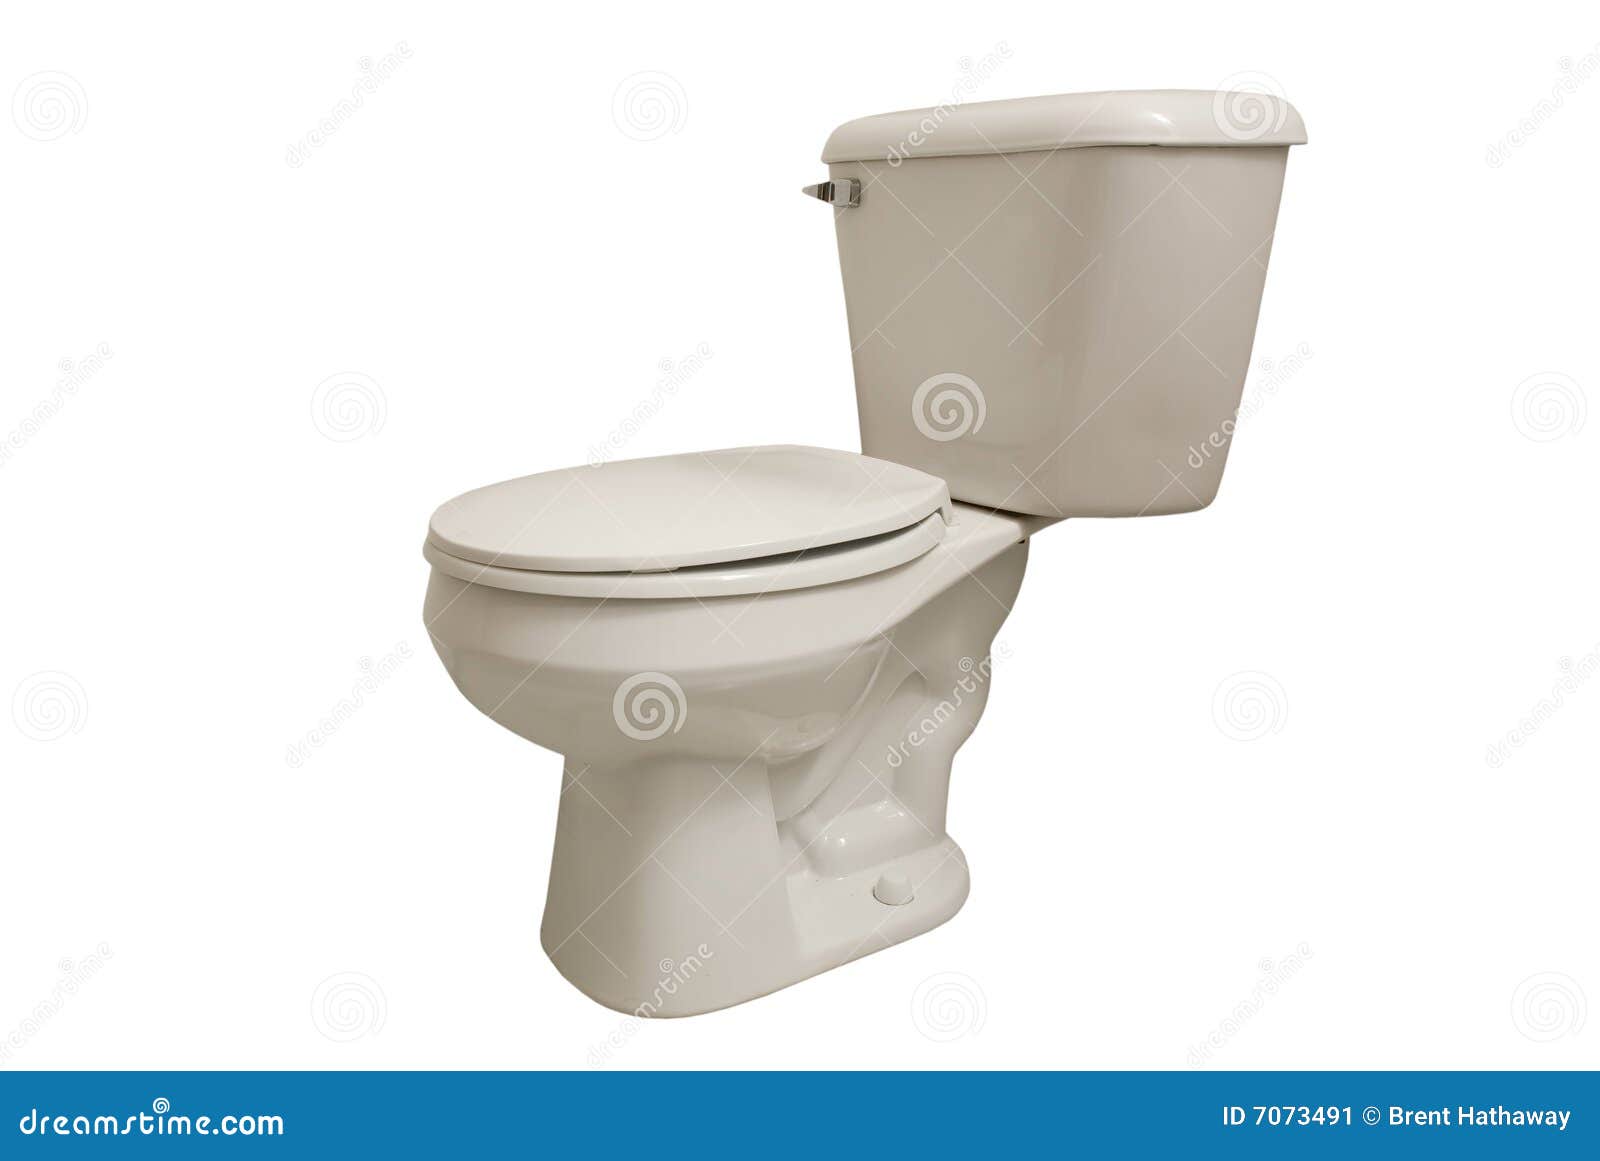 20,485 Toilet Bowl Stock Photos - Free & Royalty-Free Stock Photos from  Dreamstime